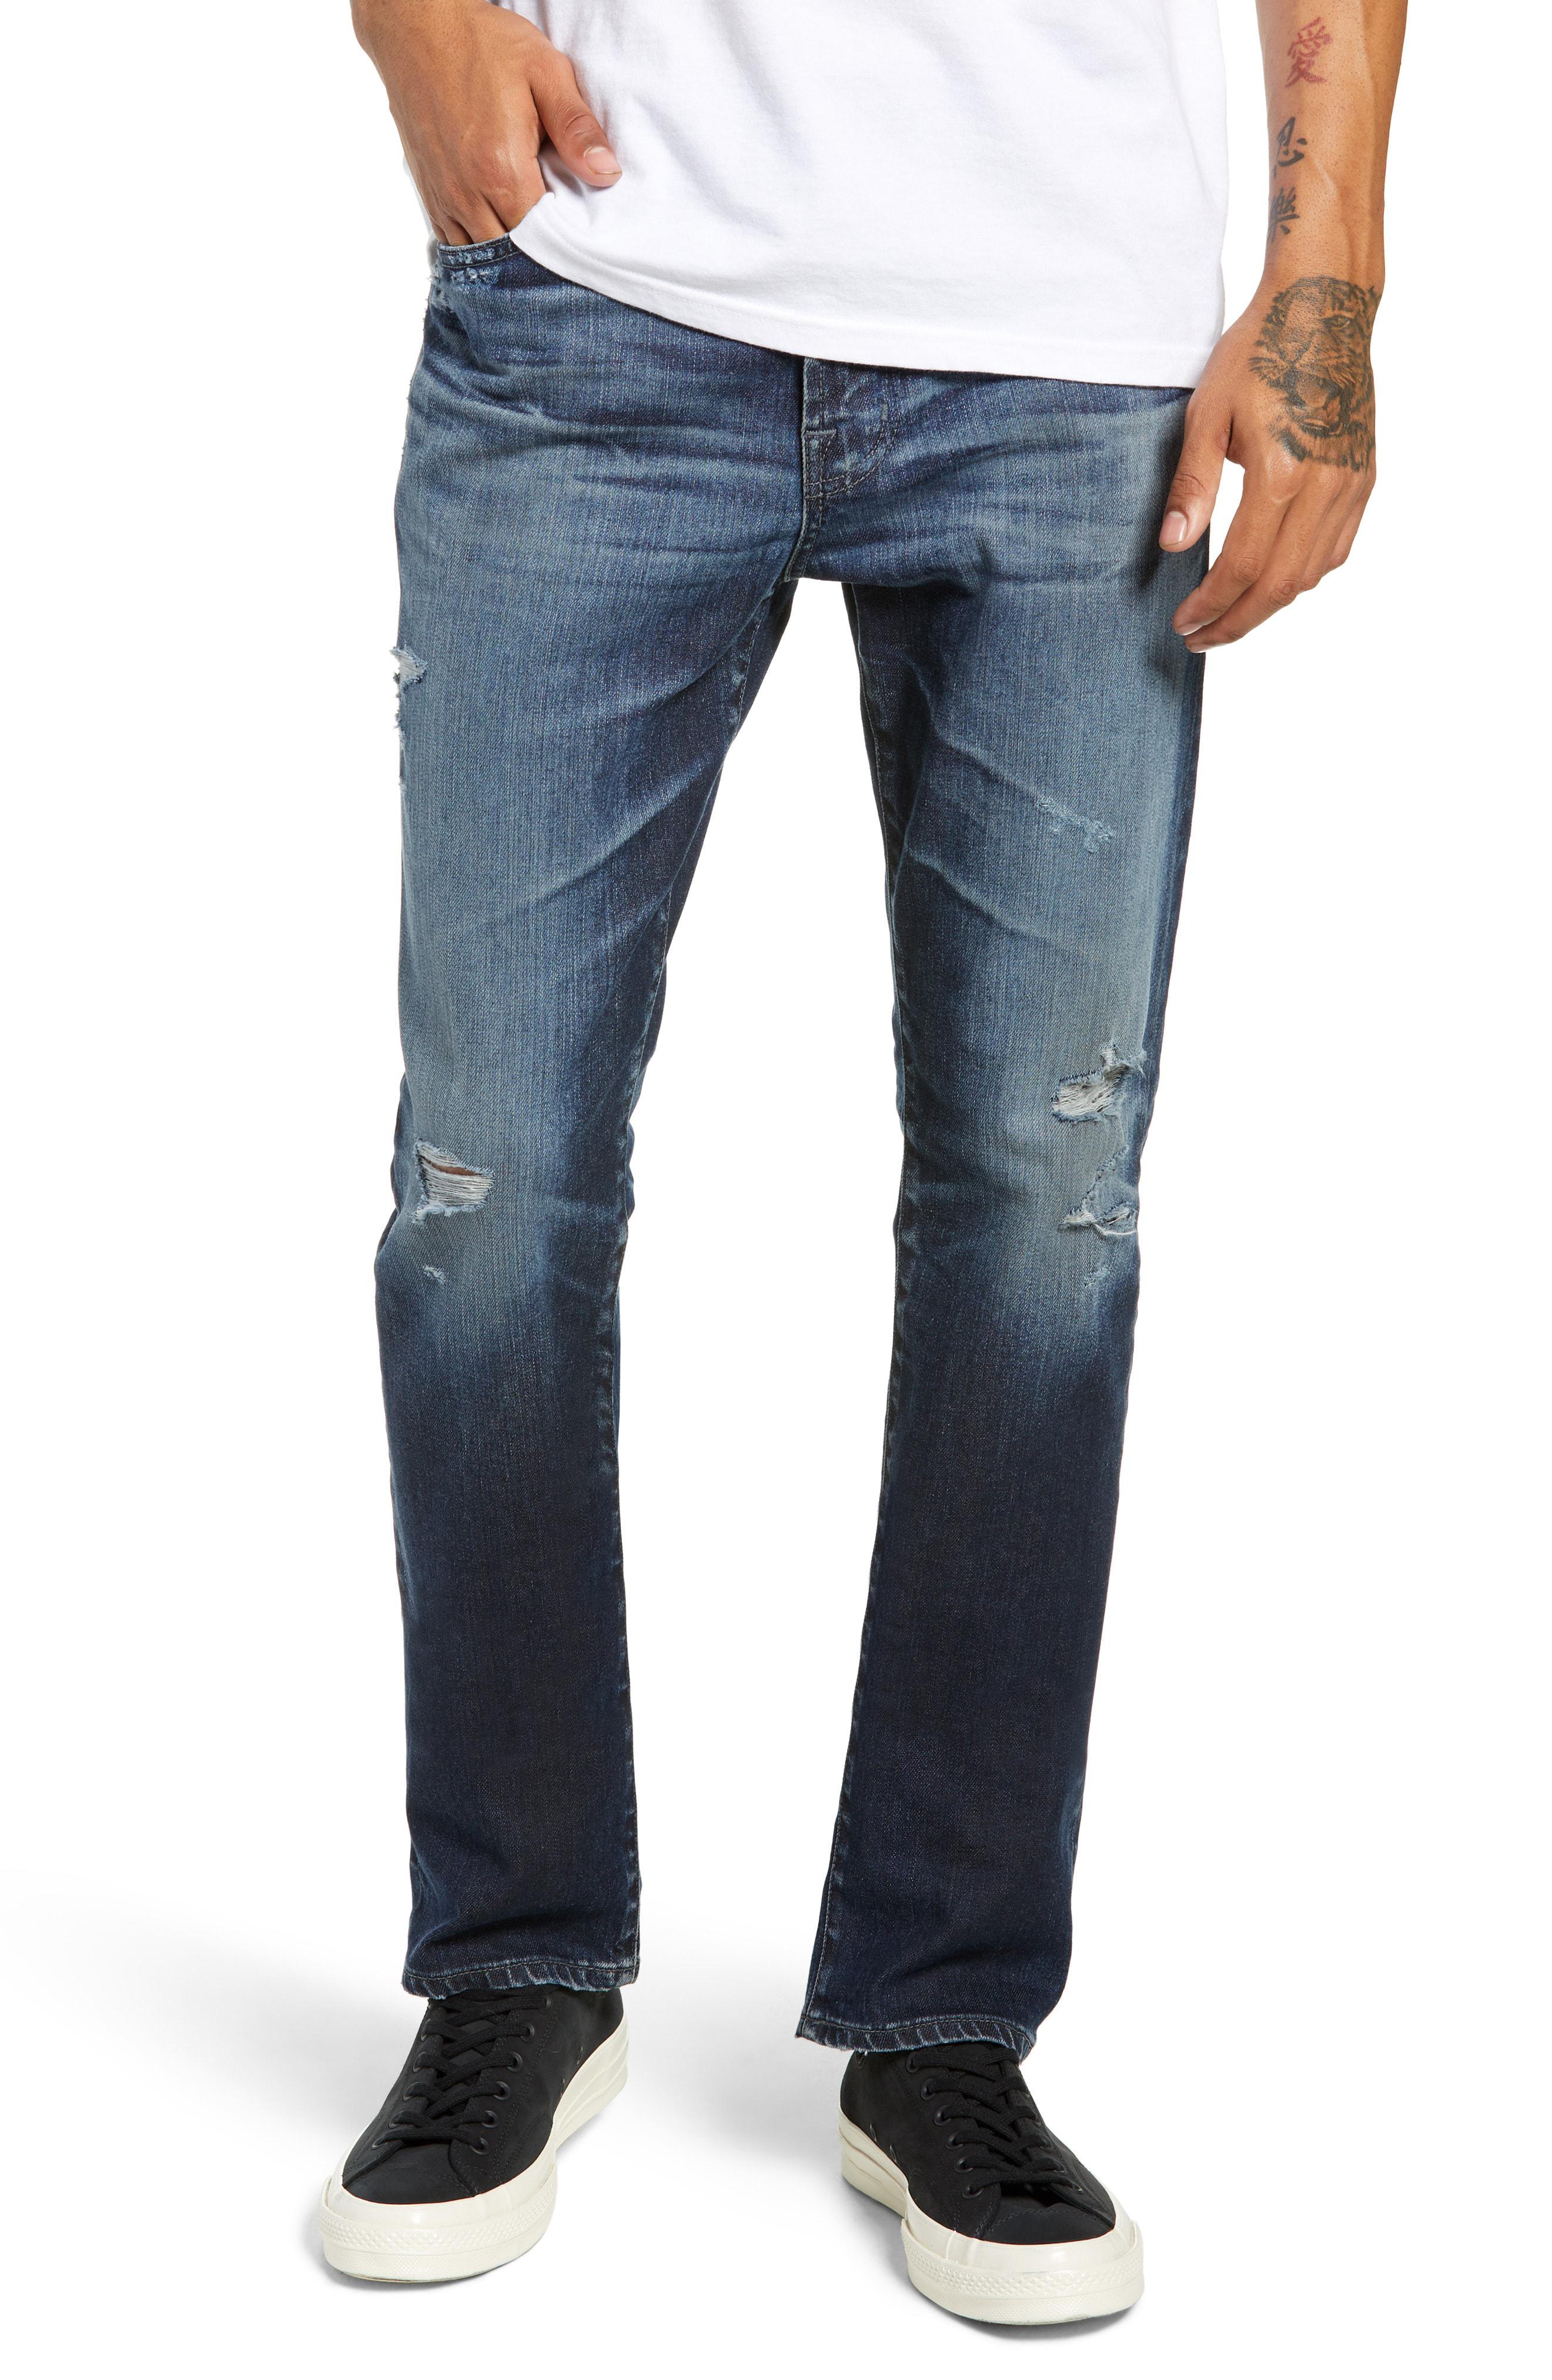 Lyst - AG Jeans Dylan Skinny Fit Jeans in Blue for Men